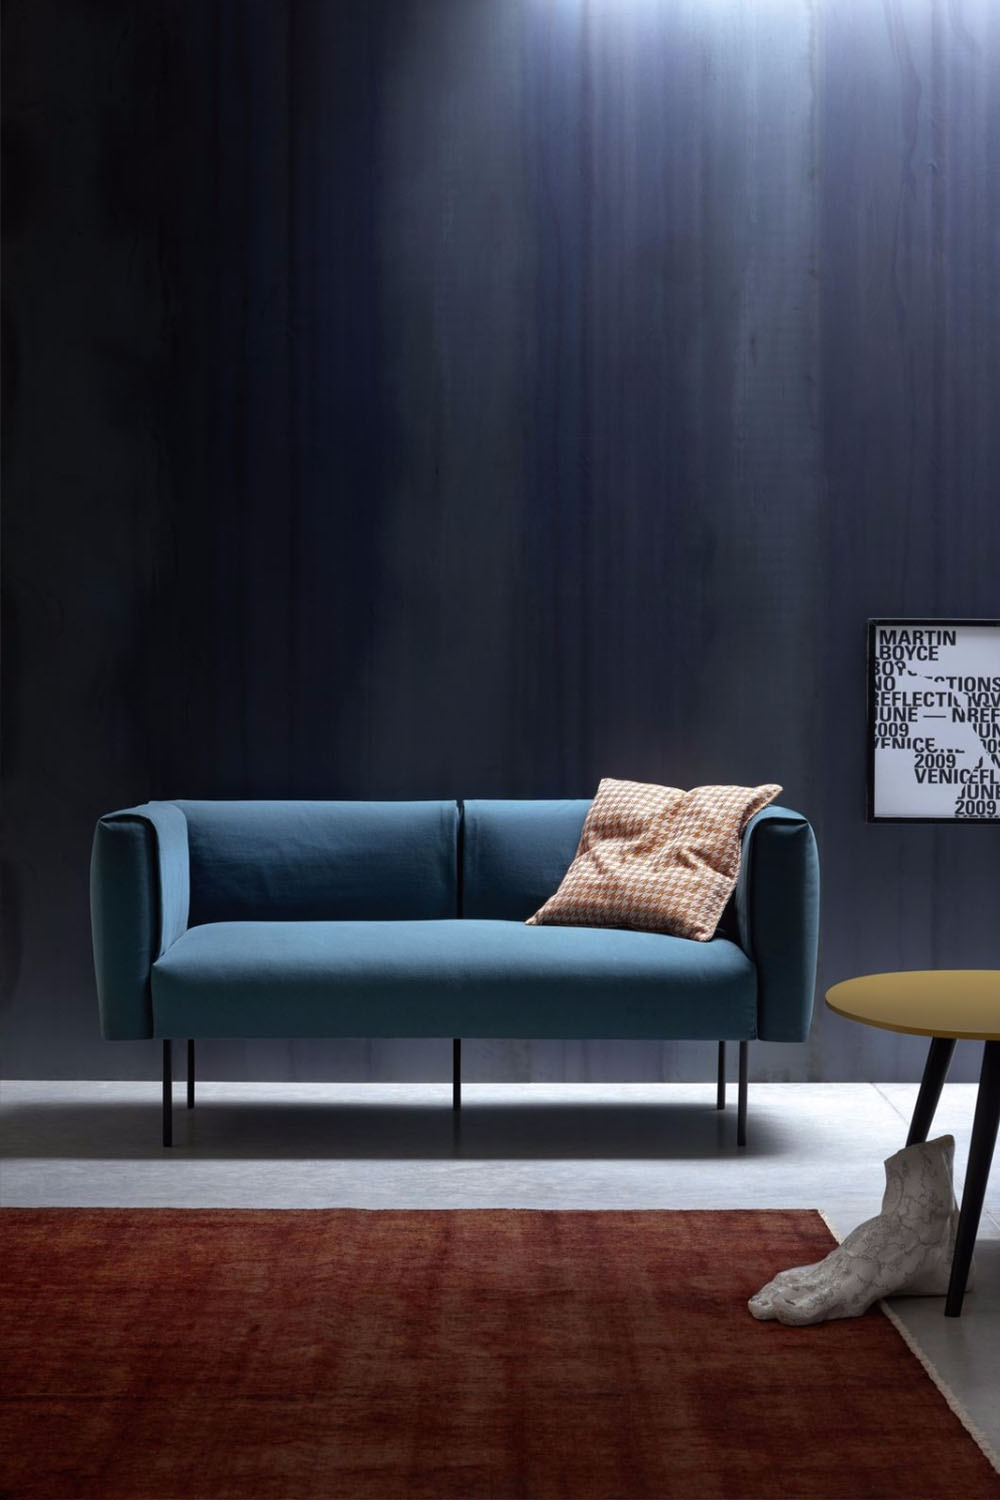 Modern luxury Italian sofa by Novamobili. Sold by Krieder UK.